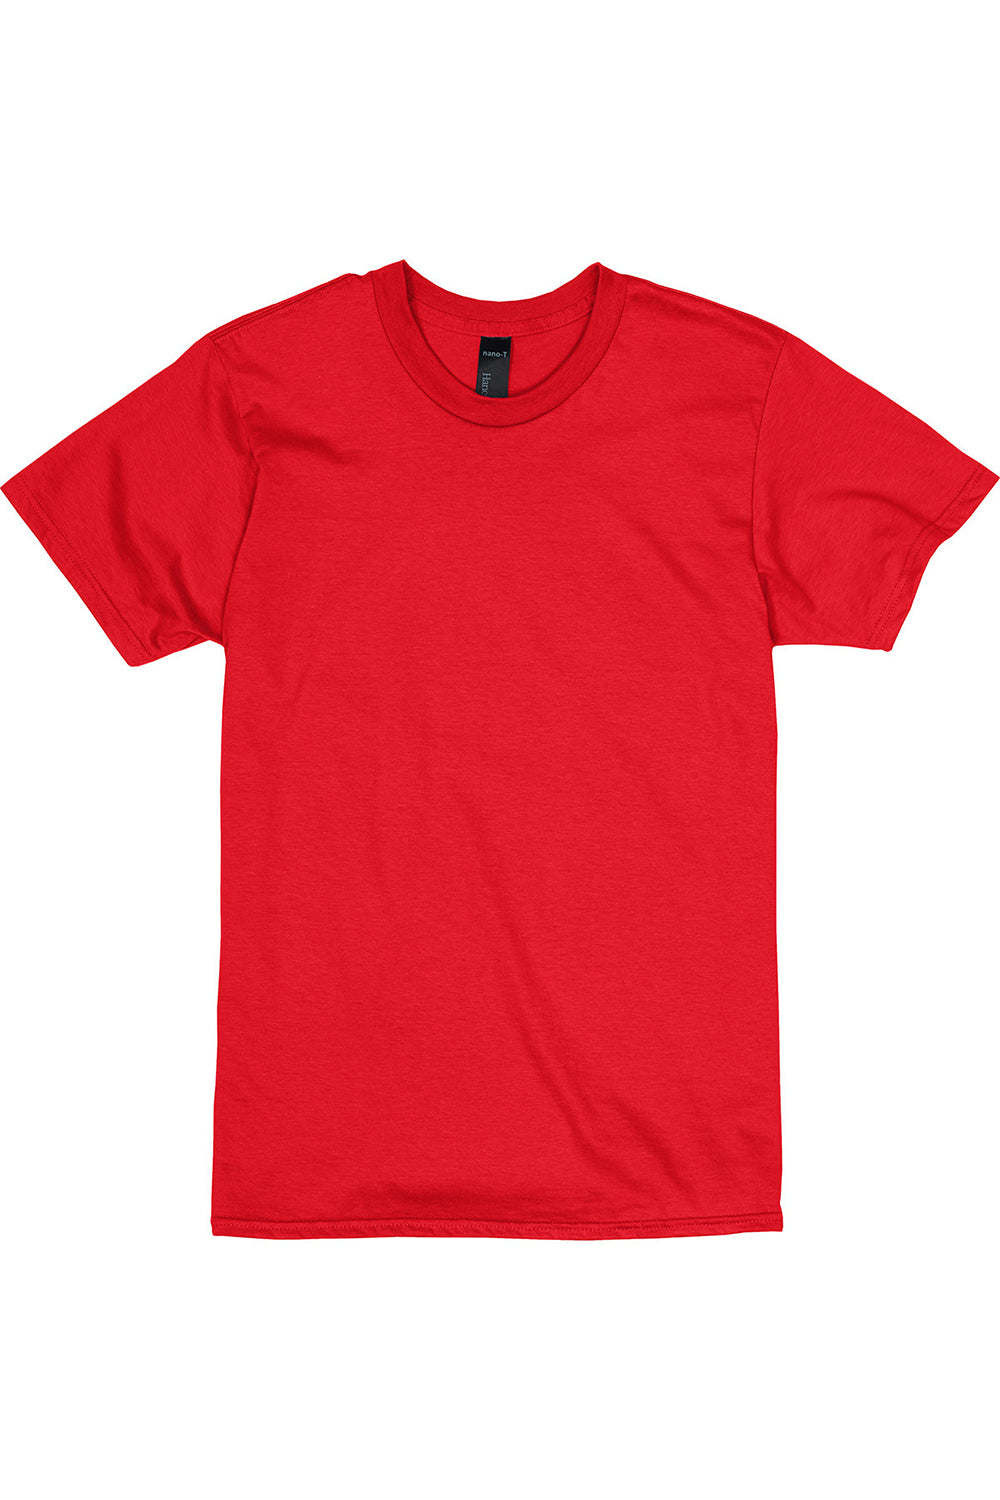 Hanes 4980 Mens Nano-T Short Sleeve Crewneck T-Shirt Athletic Red Flat Front